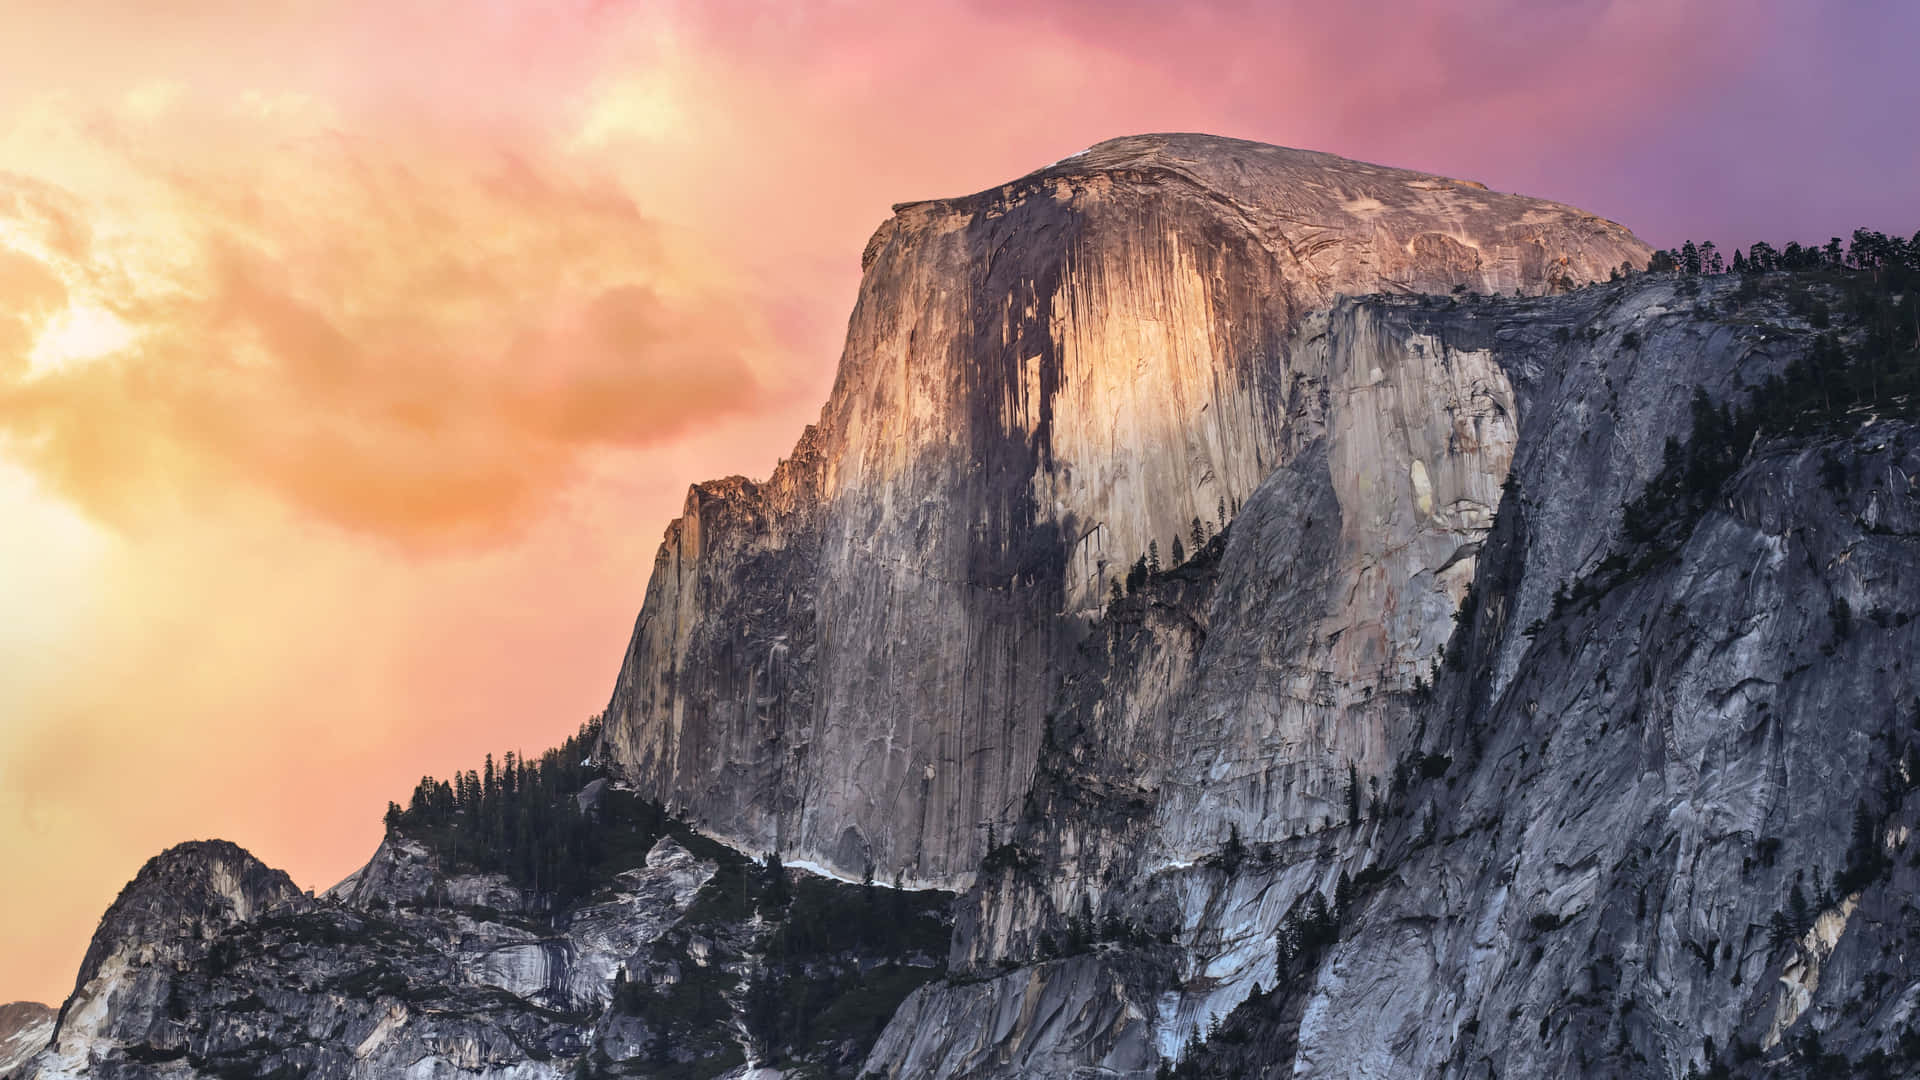 Espectacularacantilado Del Parque Nacional De Yosemite Como Fondo De Pantalla Predeterminado En Macbook. Fondo de pantalla